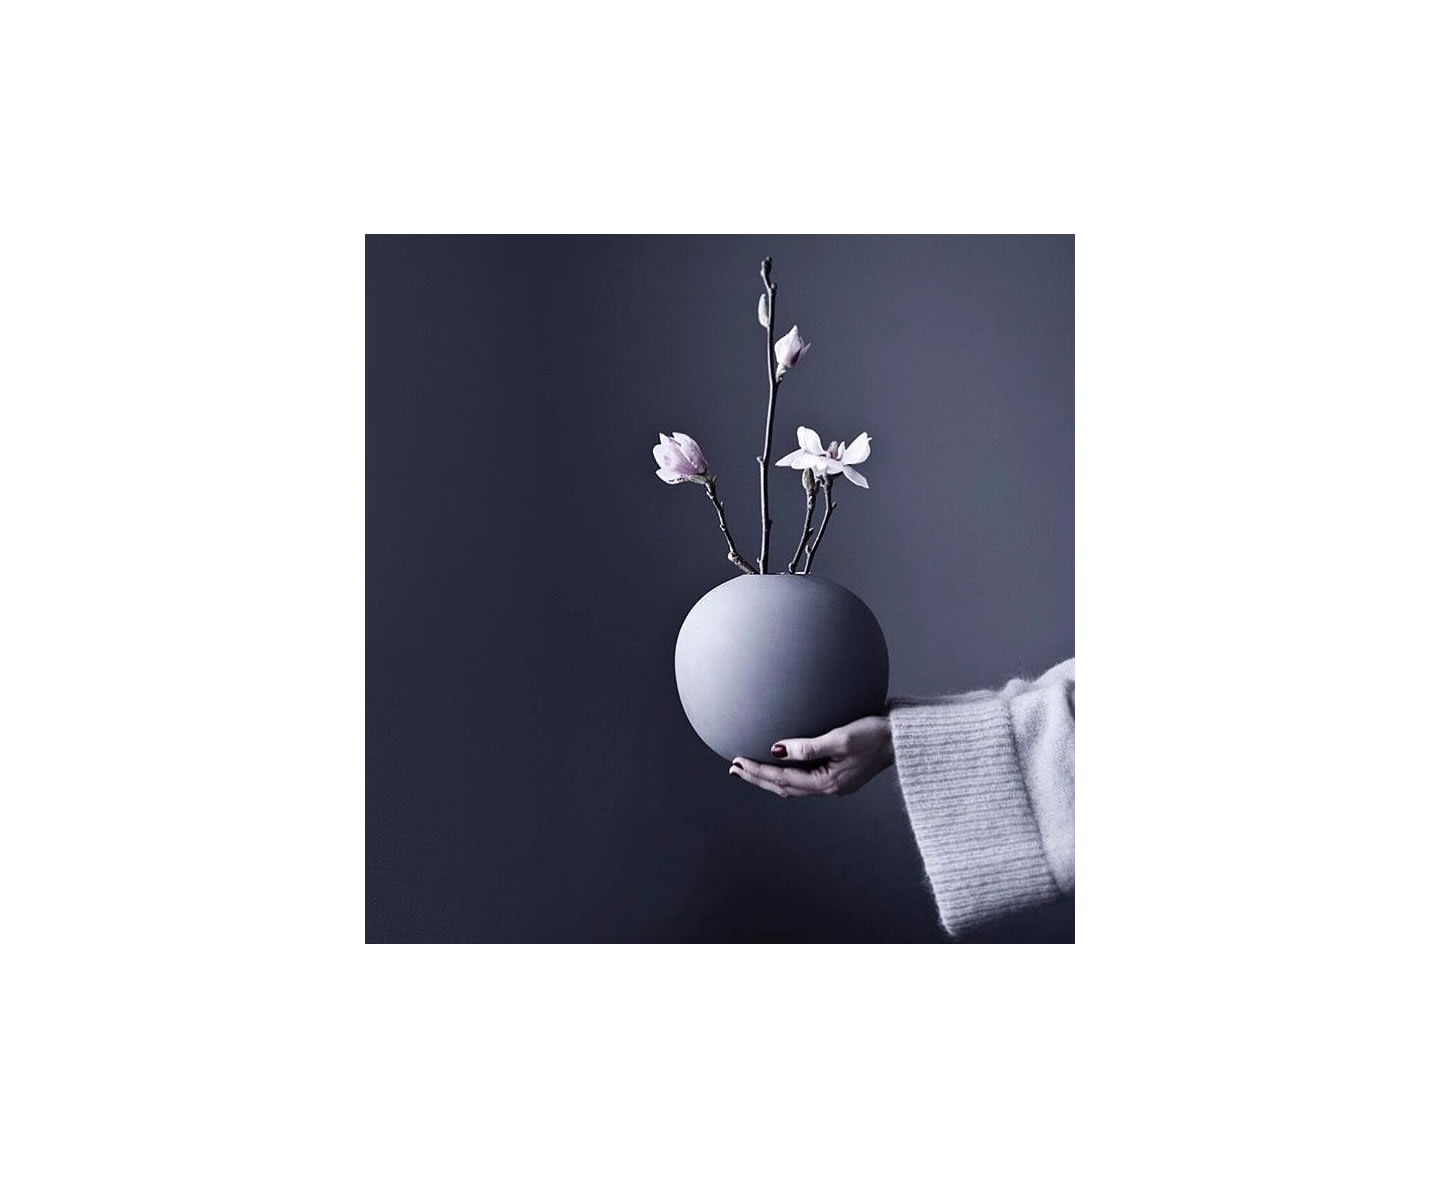 Cooee Design Ball Vase Grau 20cm